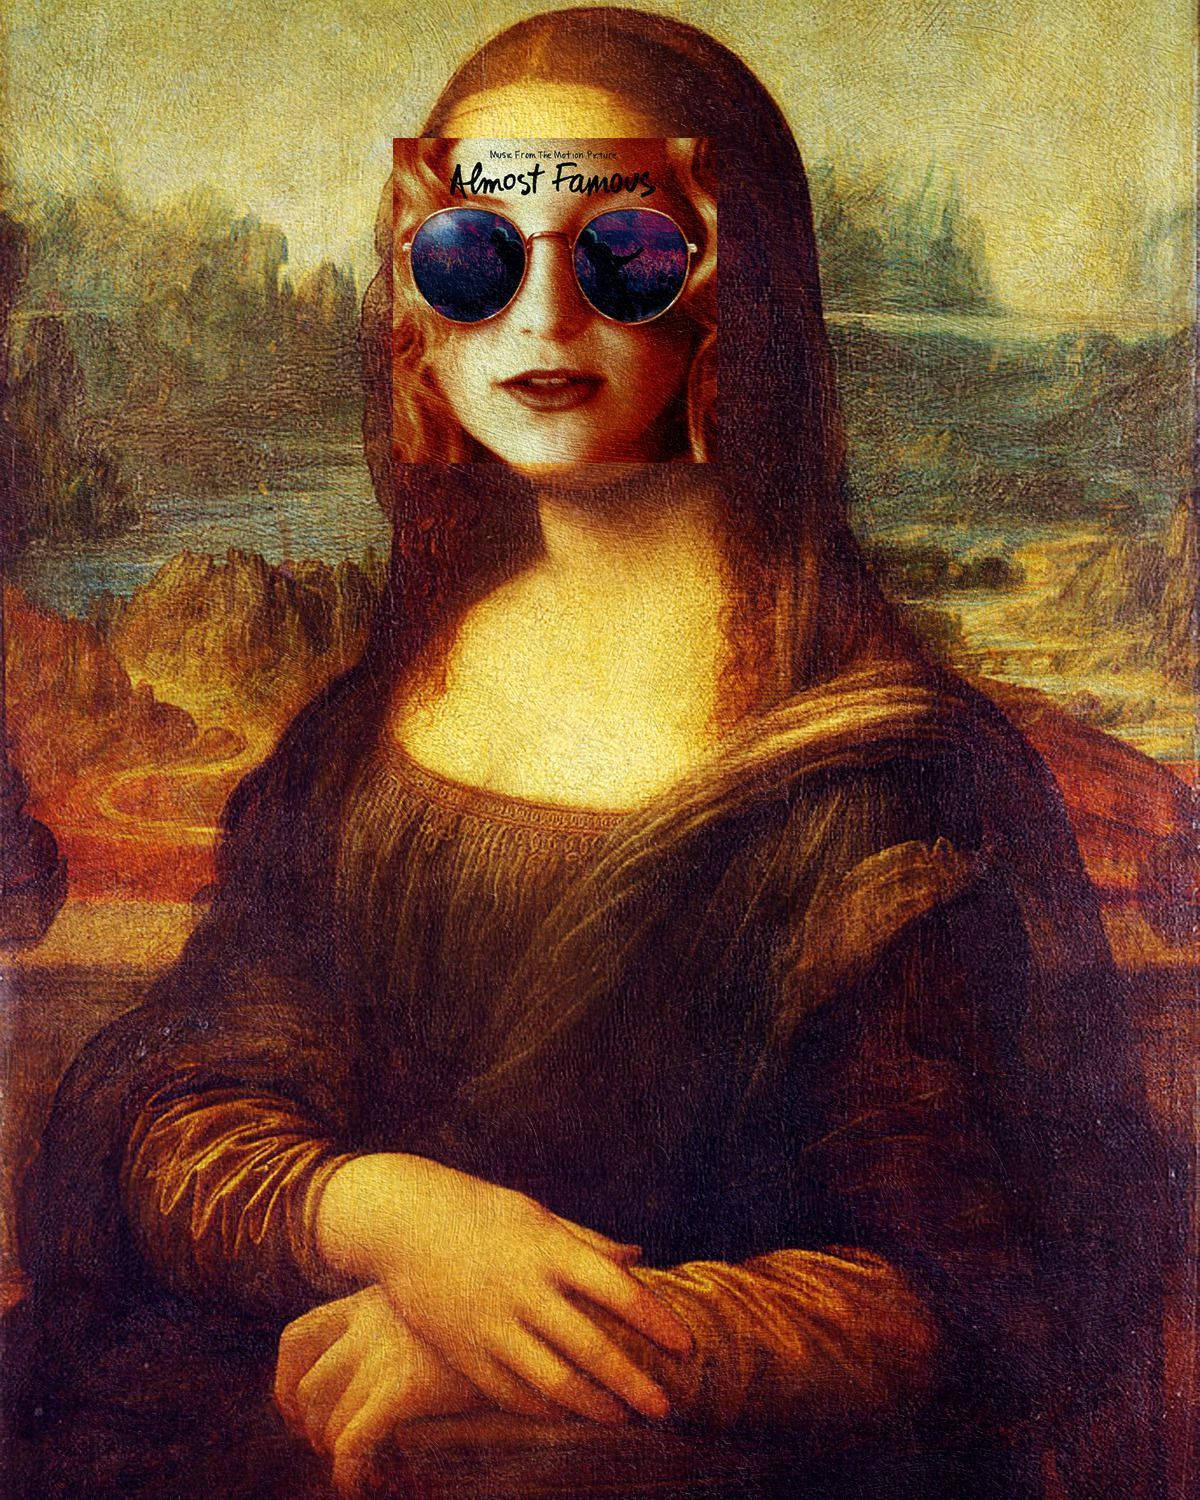 Almost Famous Mona Lisa Meme Wallpaper